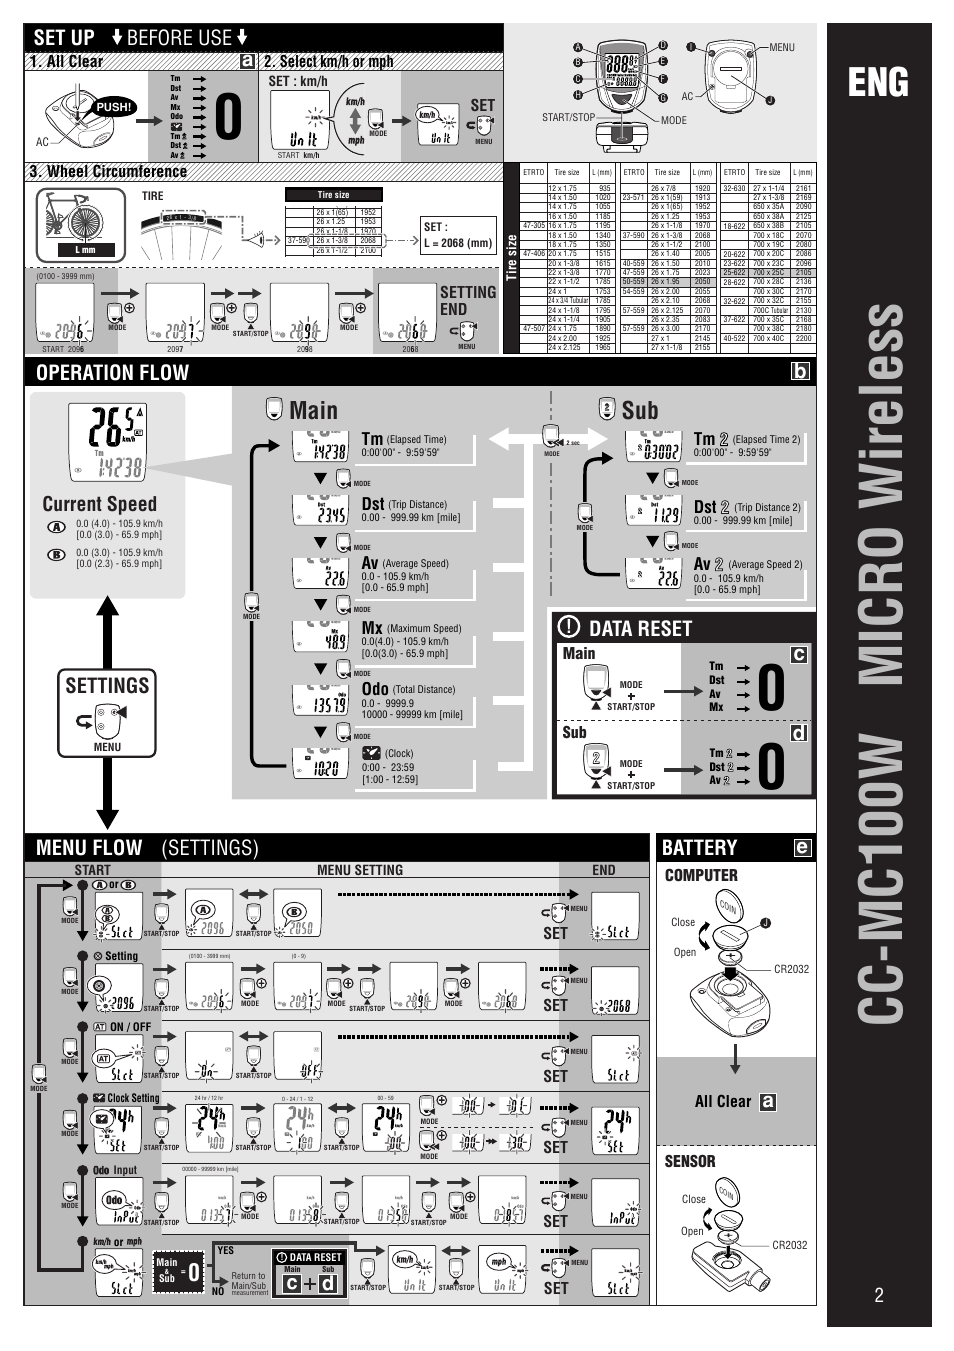 Cc-mc100w micro wireless, Main sub, Ac b | CatEye CC-MC100W [Micro